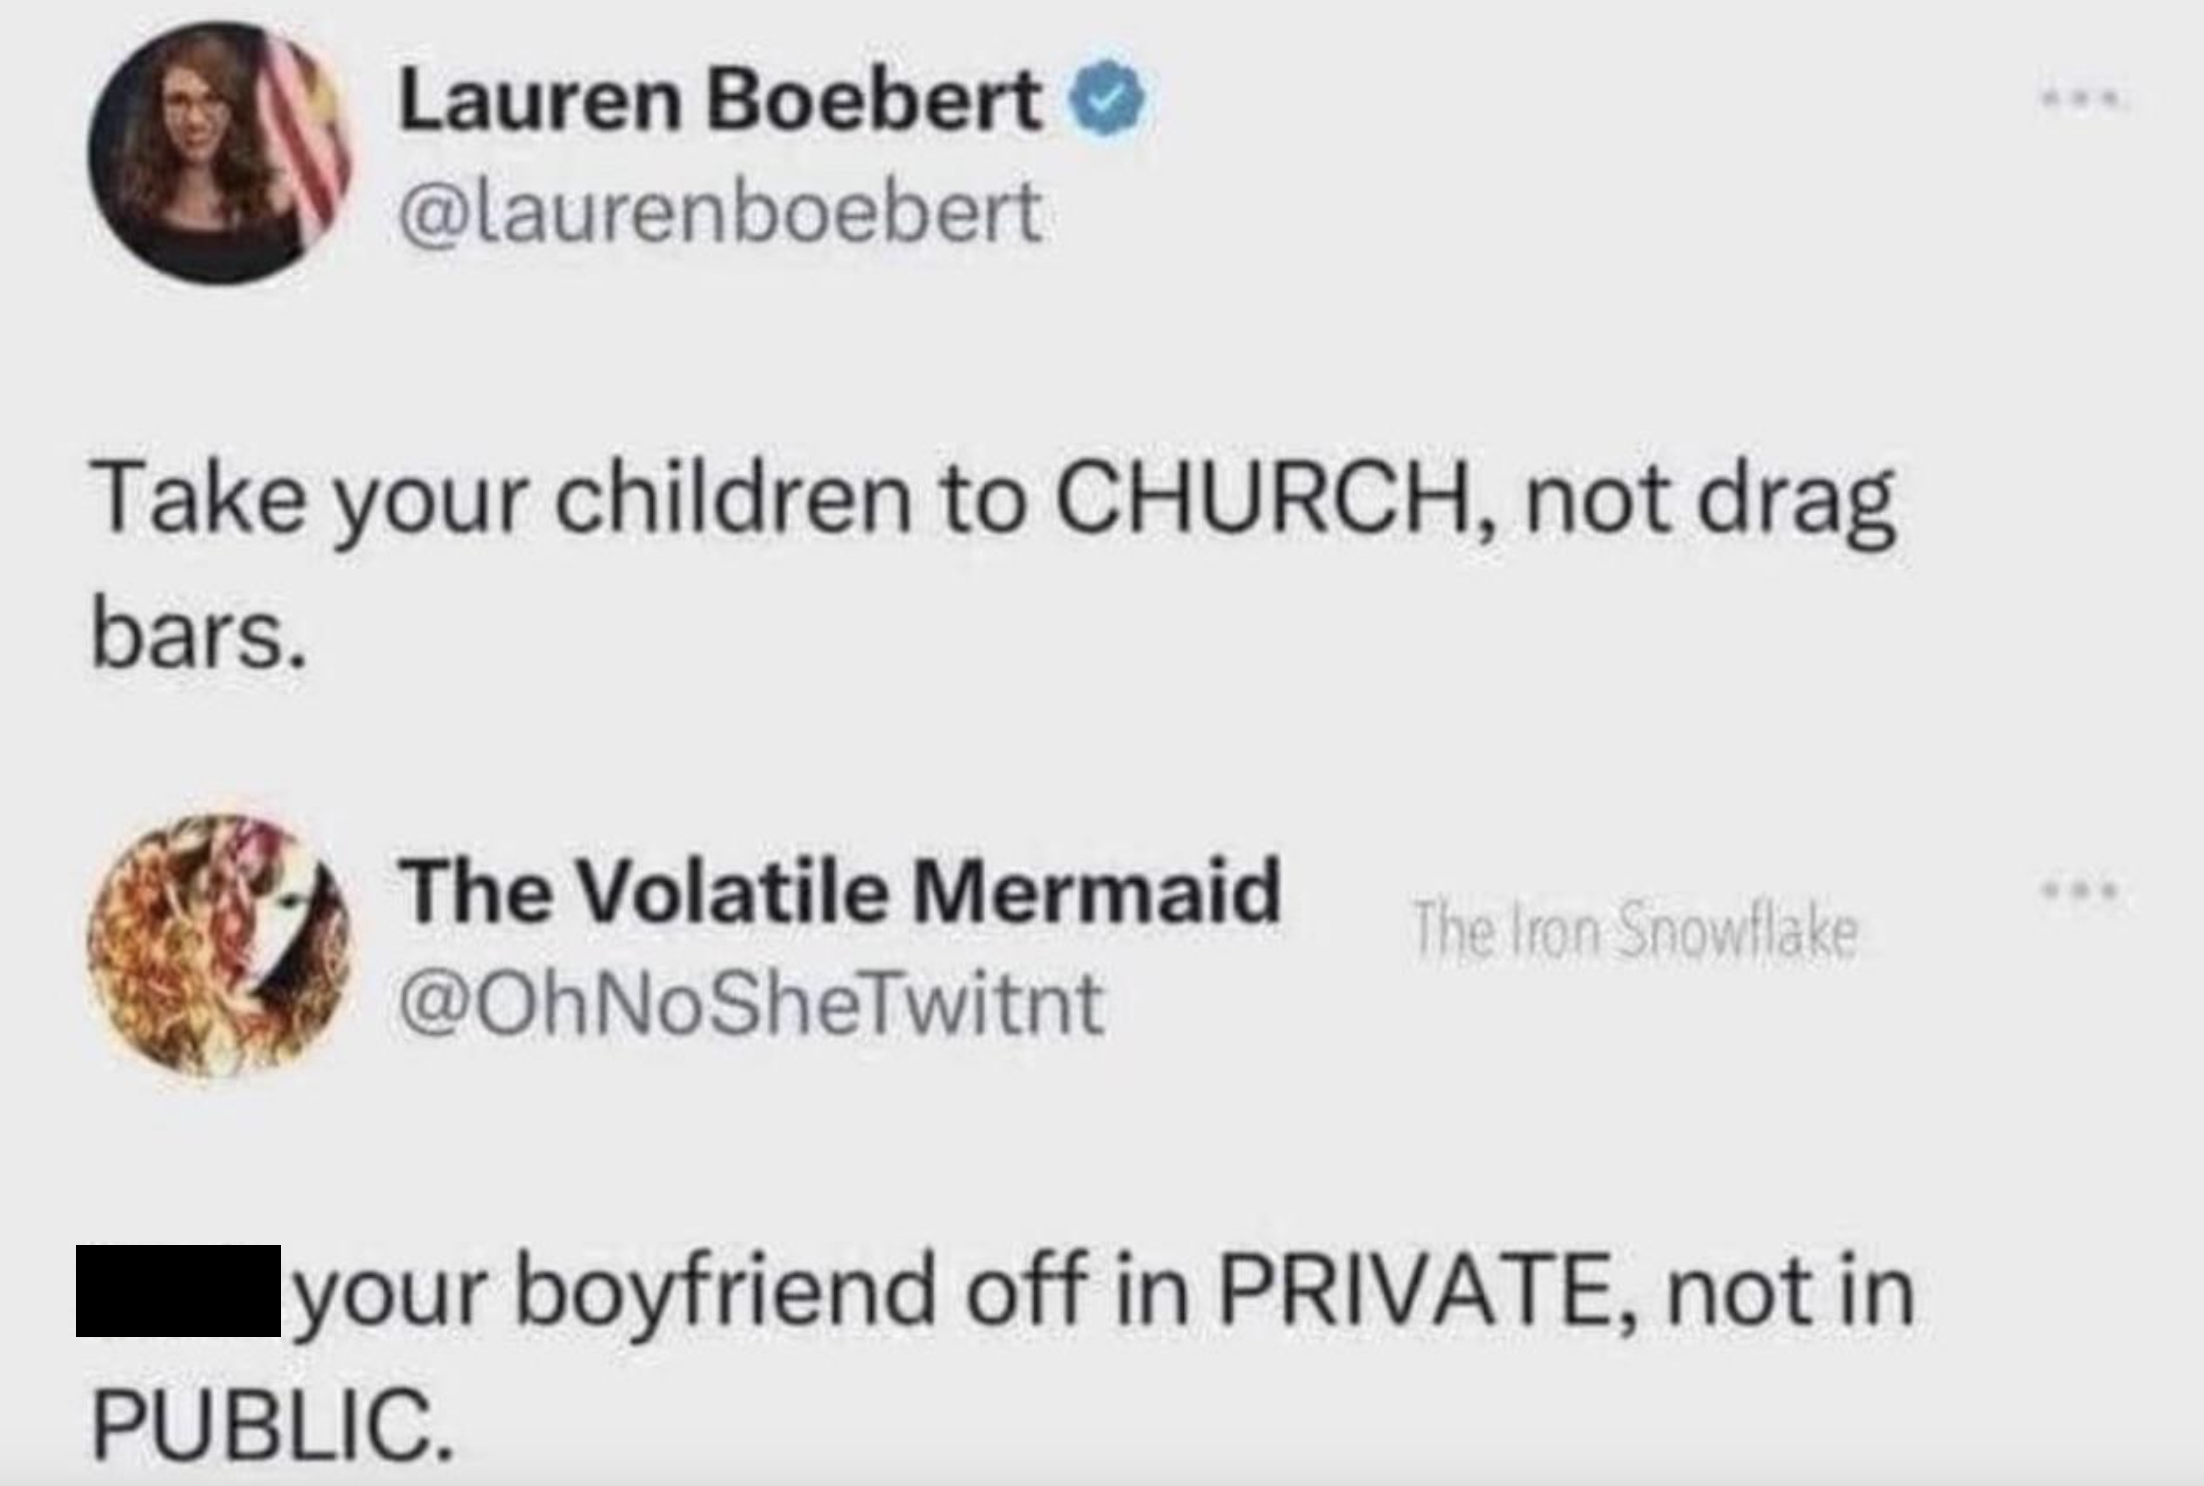 Lauren Boebert - Lauren Boebert Take your children to Church, not drag bars. The Volatile Mermaid The Iron Snowflake your boyfriend off in Private, not in Public.